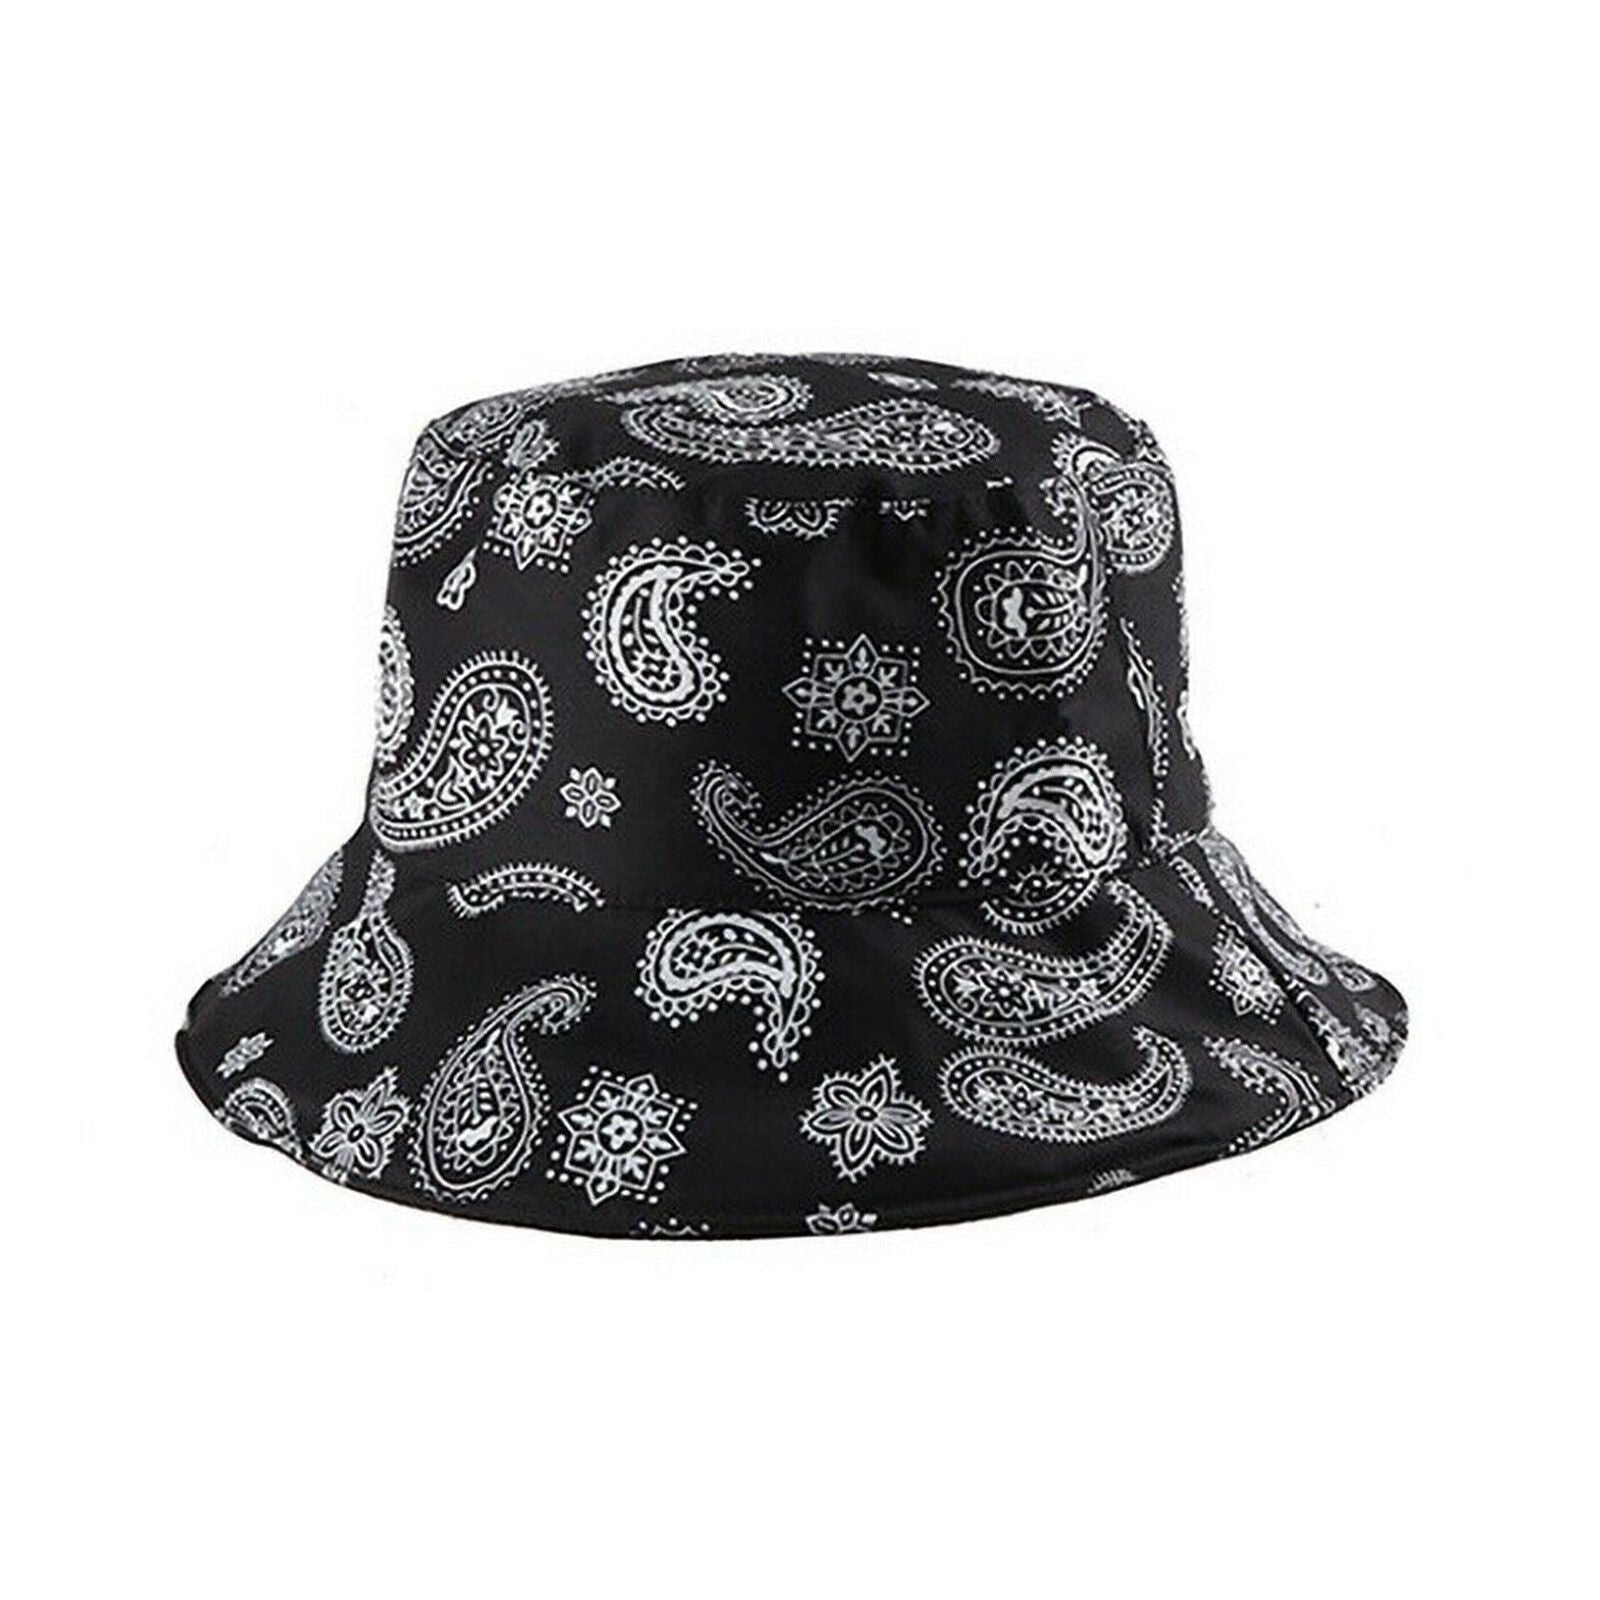 Pretty Summer Black Reversible Fashion Print Bucket Hat Great Gift